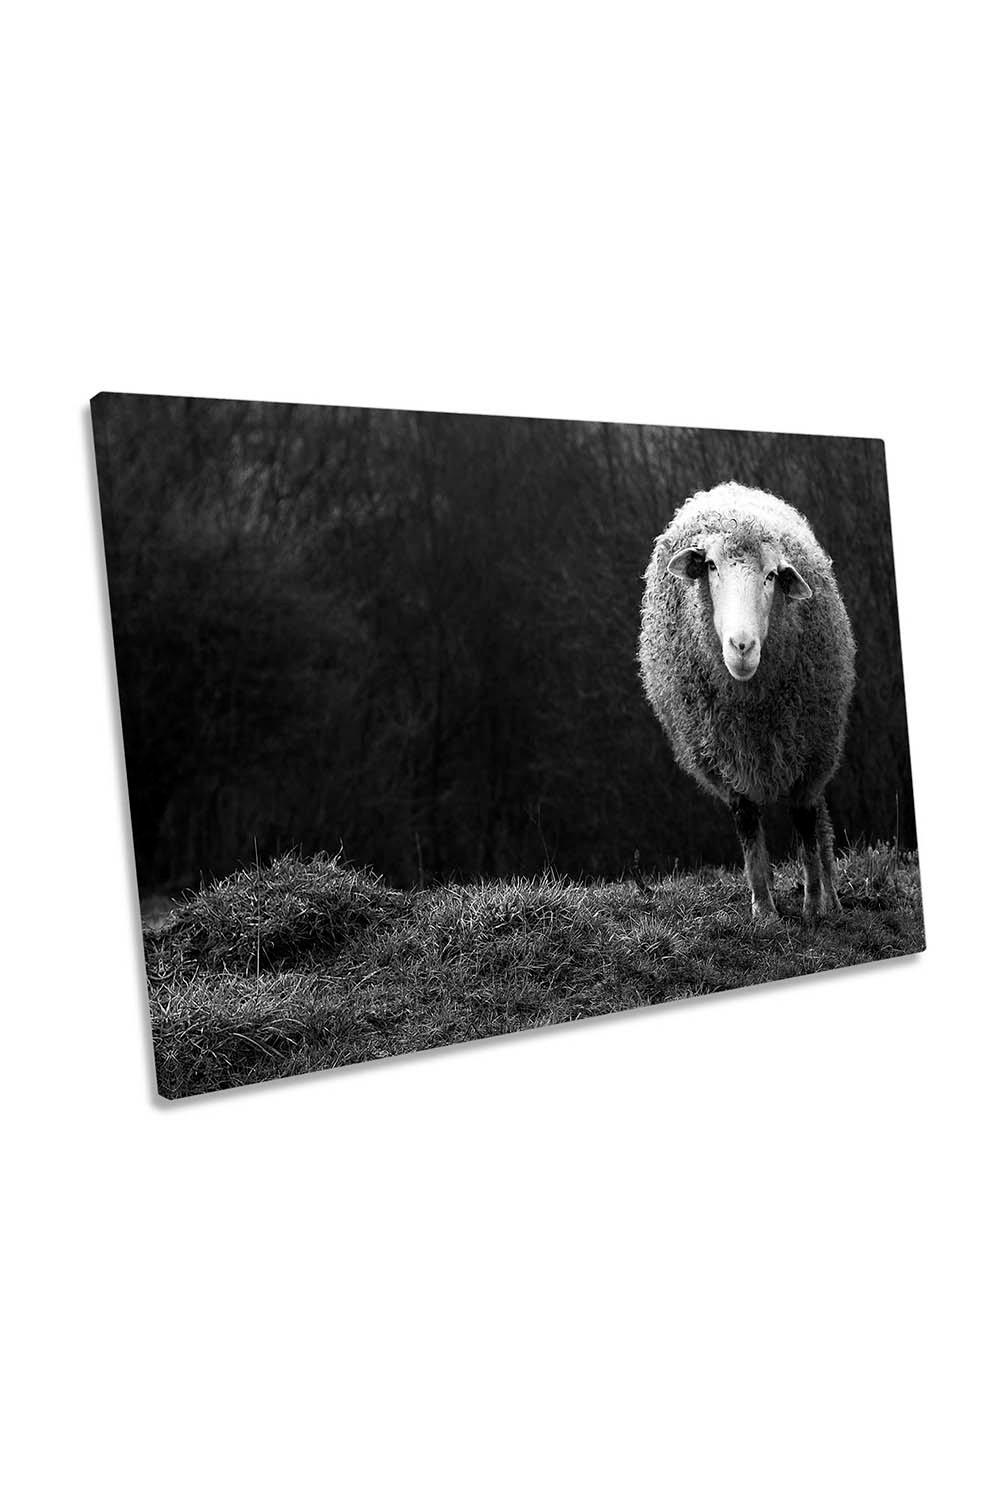 Wondering Sheep Farm Canvas Wall Art Picture Print